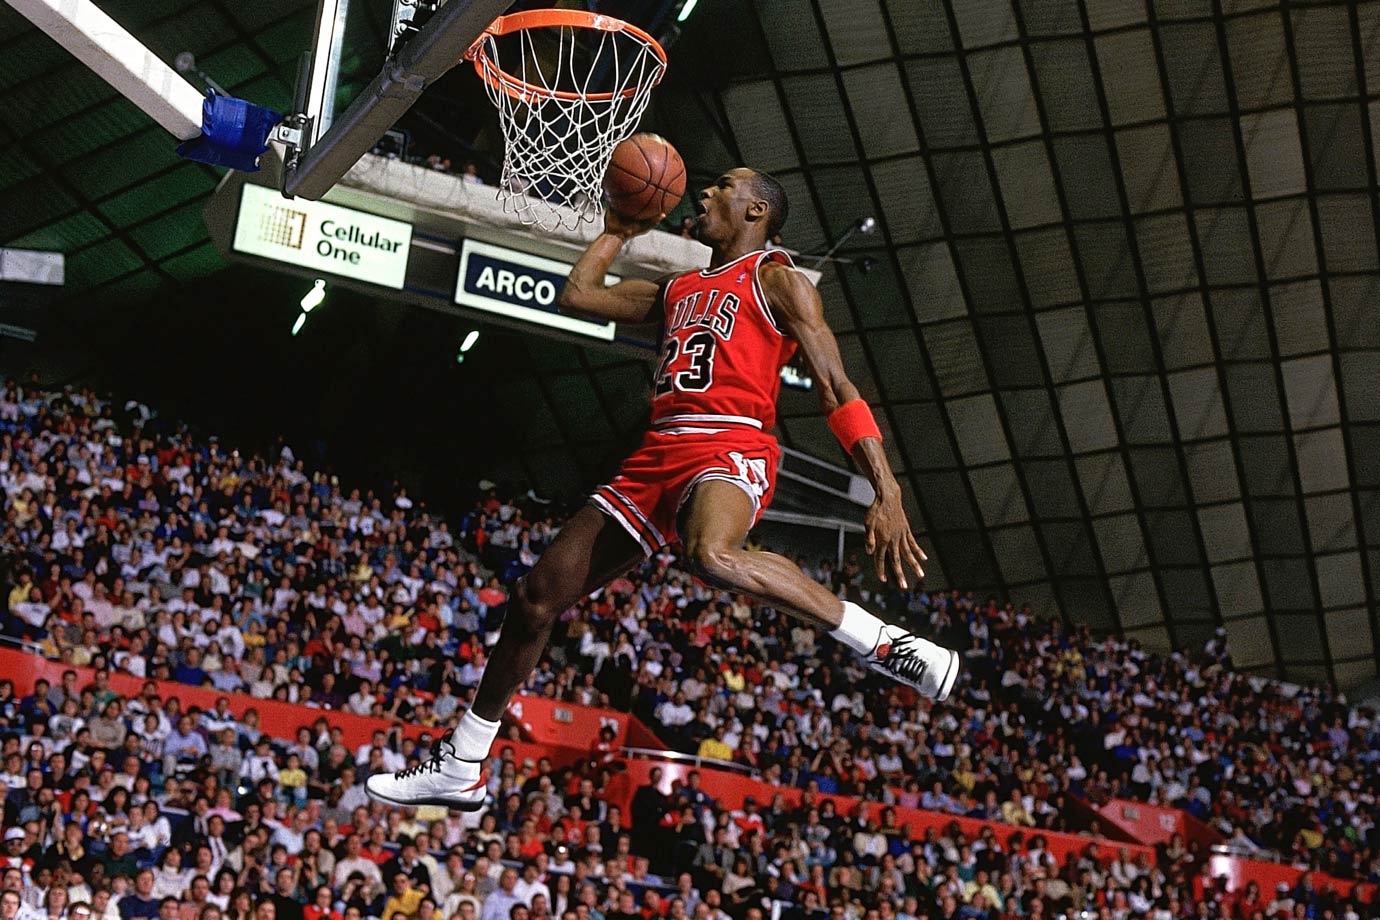 Michael Jordan Dunk Logo - Michael Jordan dunk contest photo explained by SI photographer | SI.com